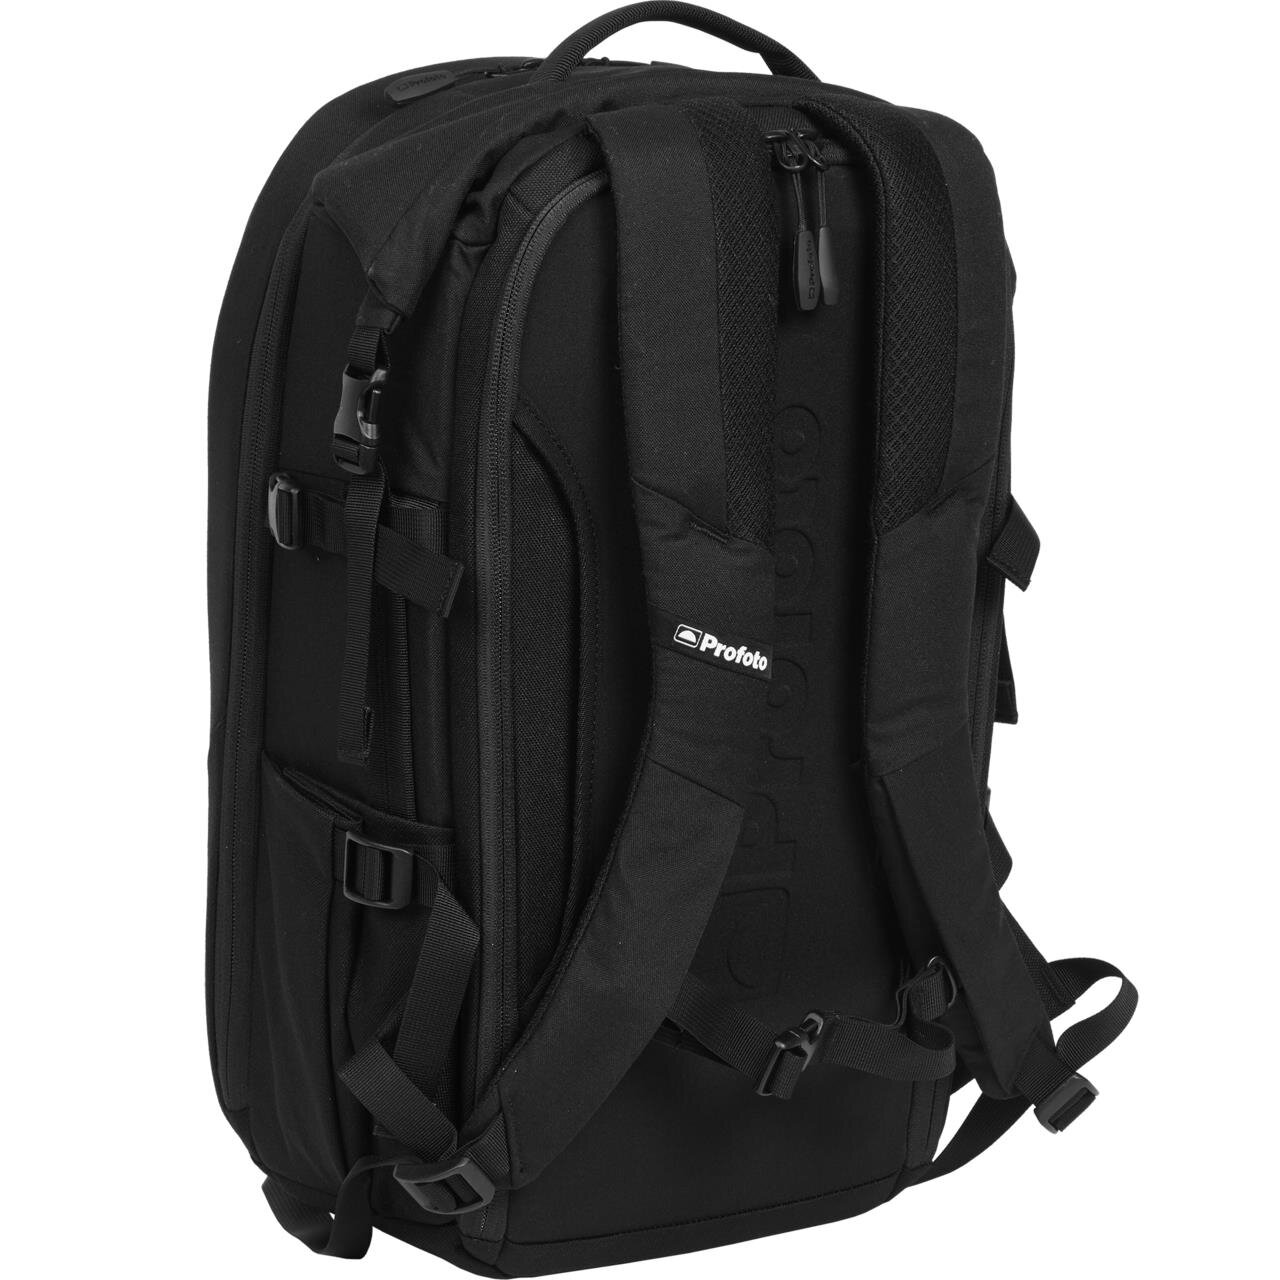 330241_c_profoto-core-backpack-s-angle-back_productimage.png.jpeg